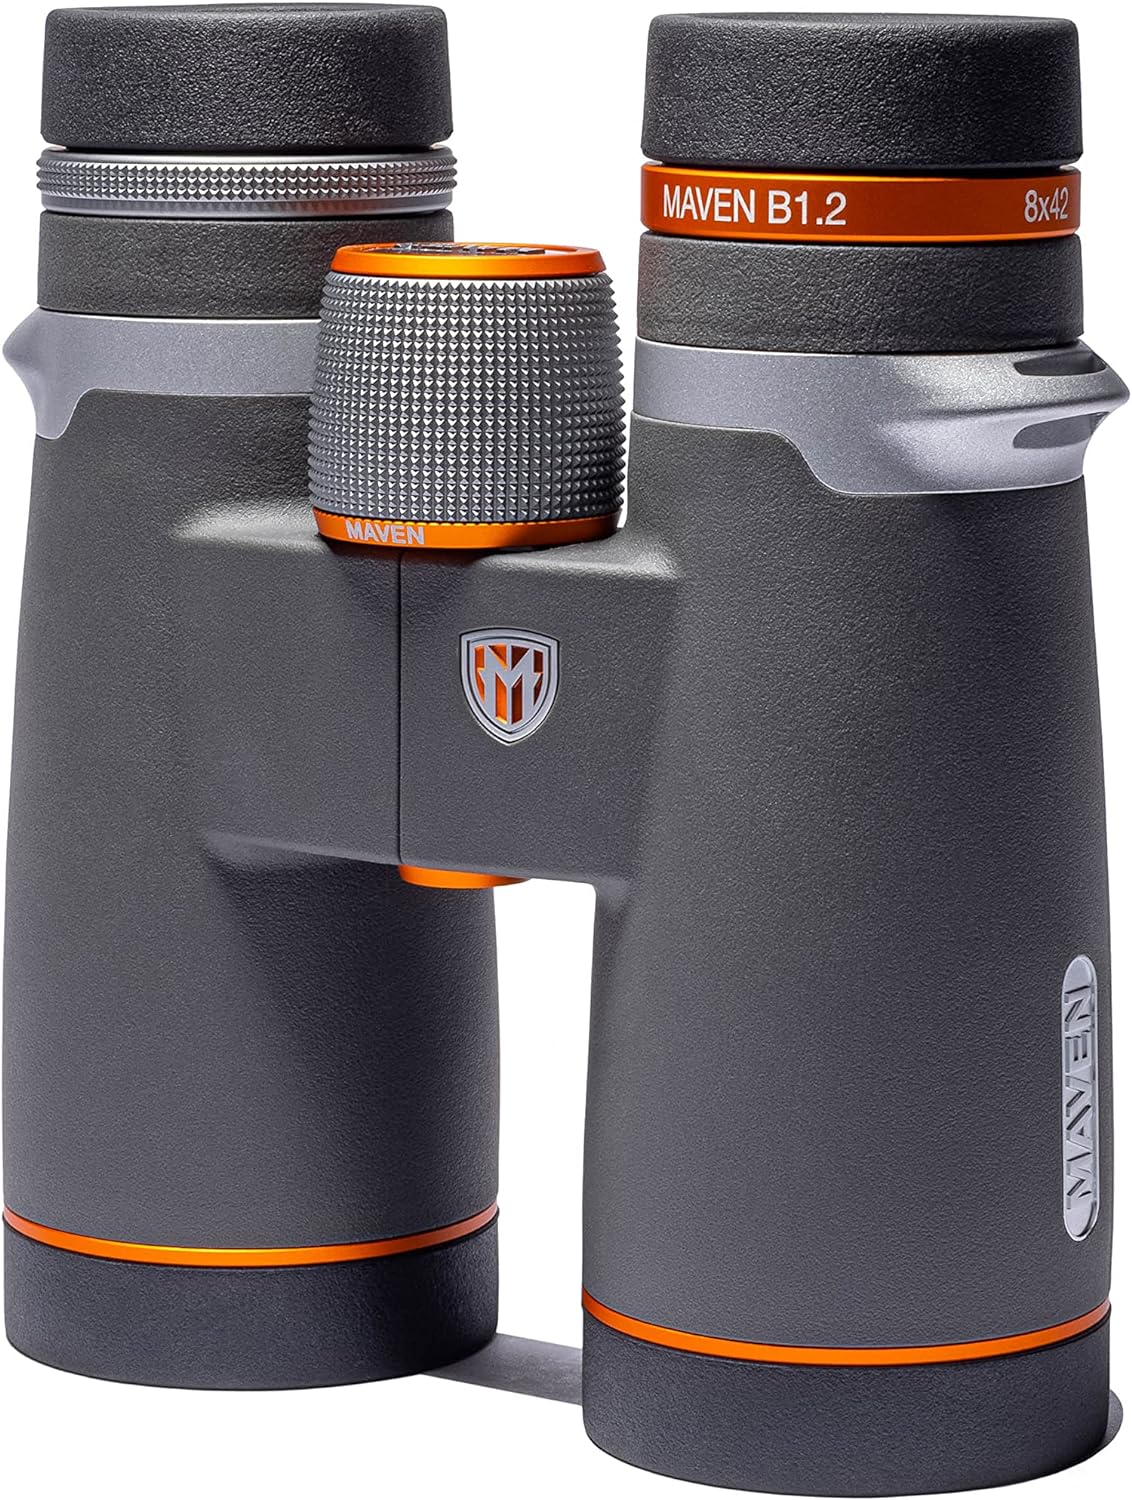 Maven B1.2 42mm ED Binoculars (8X42, Gray/Orange)